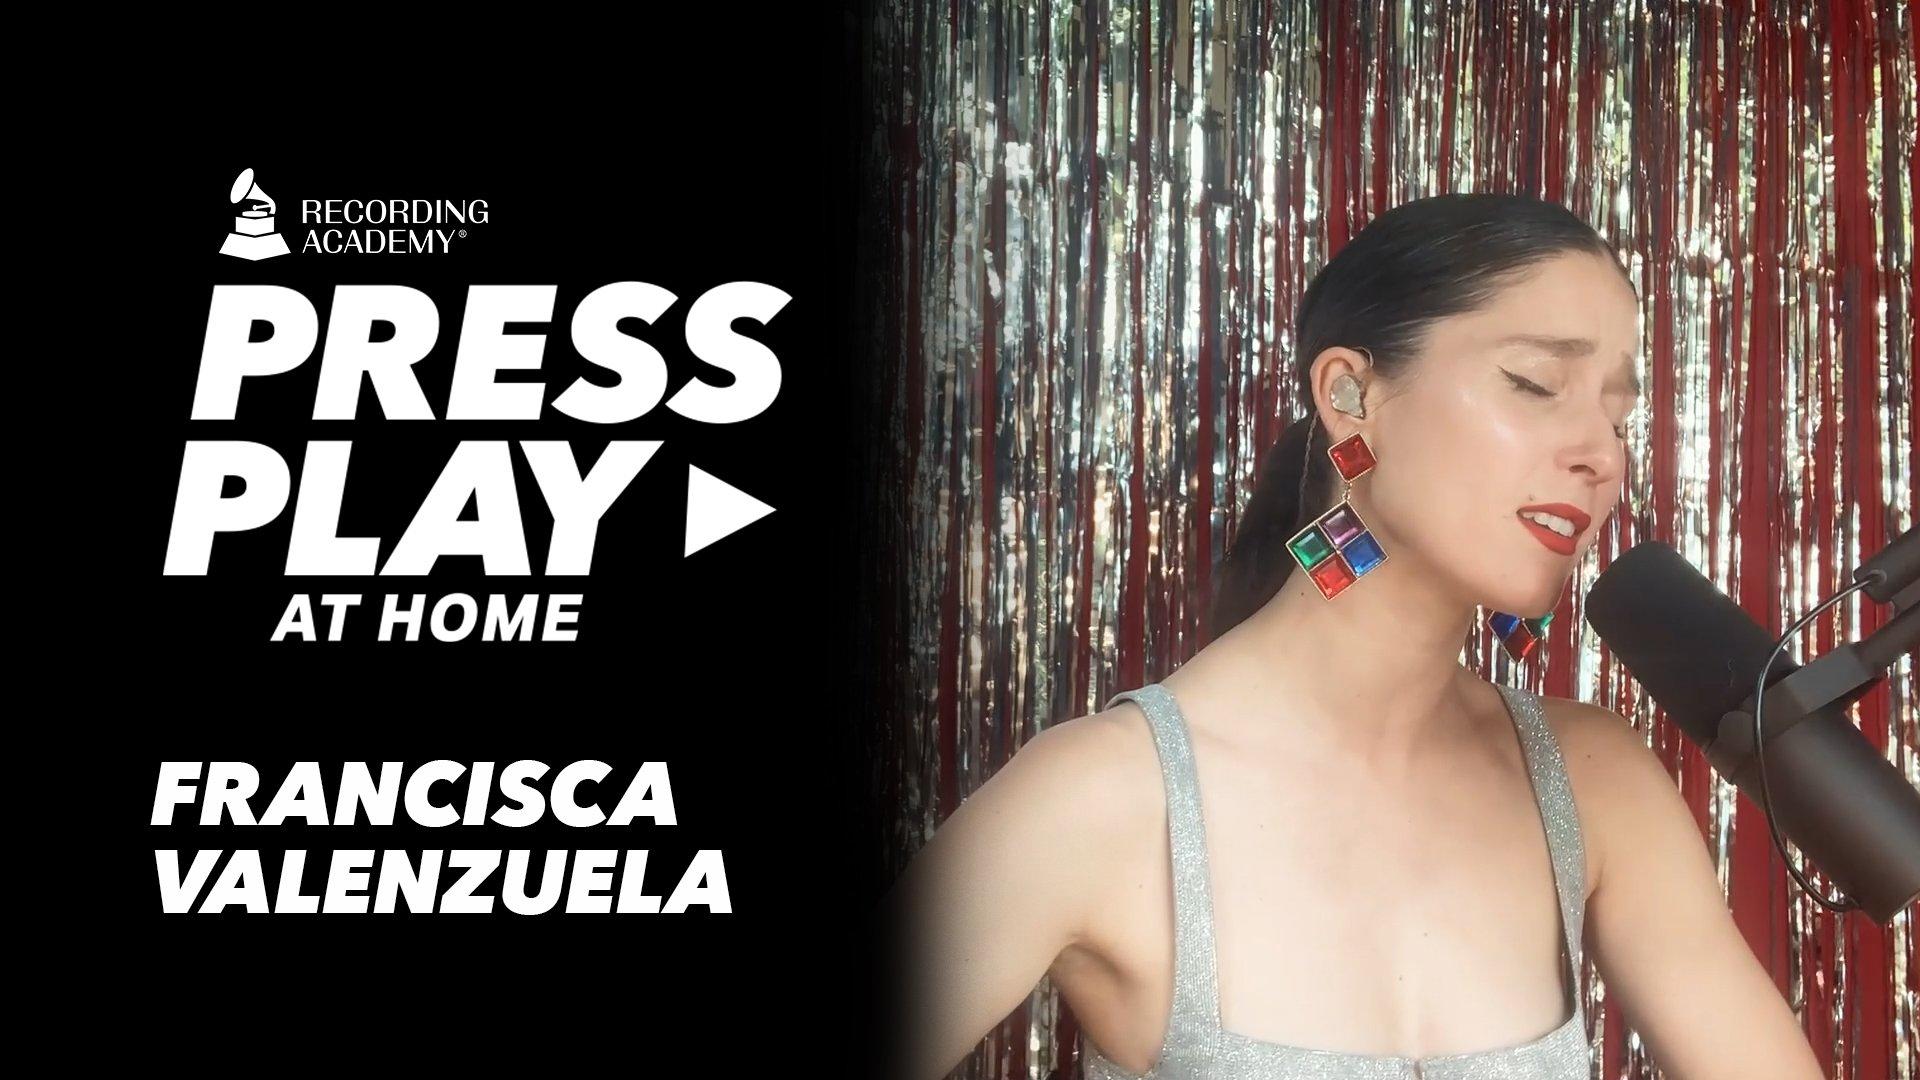 Watch Francisca Valenzuela Perform "La Fortaleza"